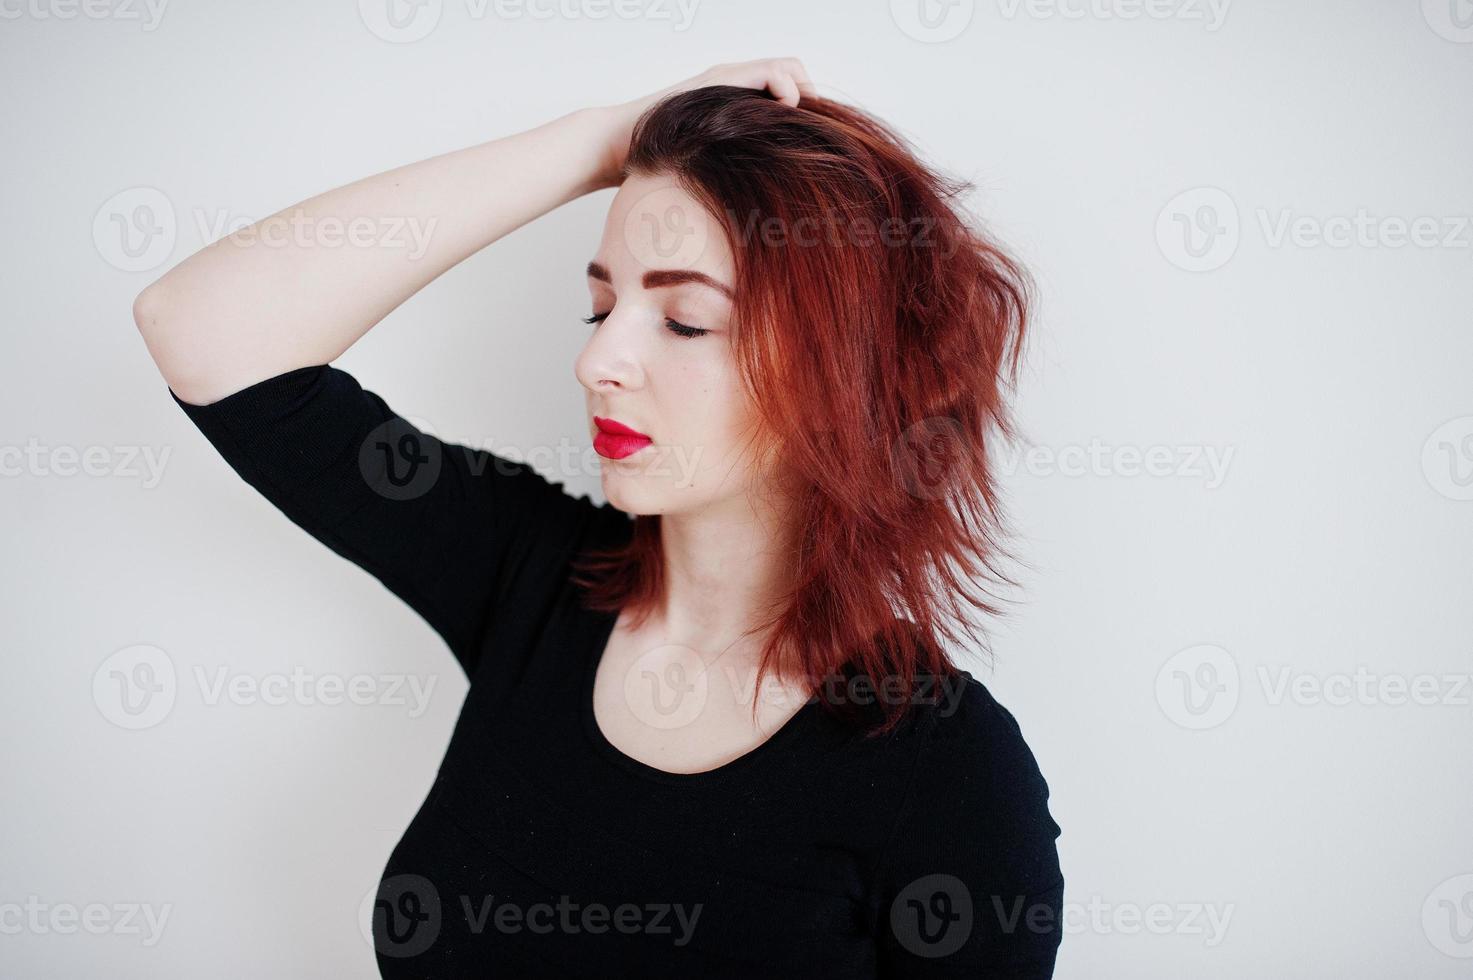 garota ruiva na túnica de vestido preto contra a parede branca no quarto vazio. foto